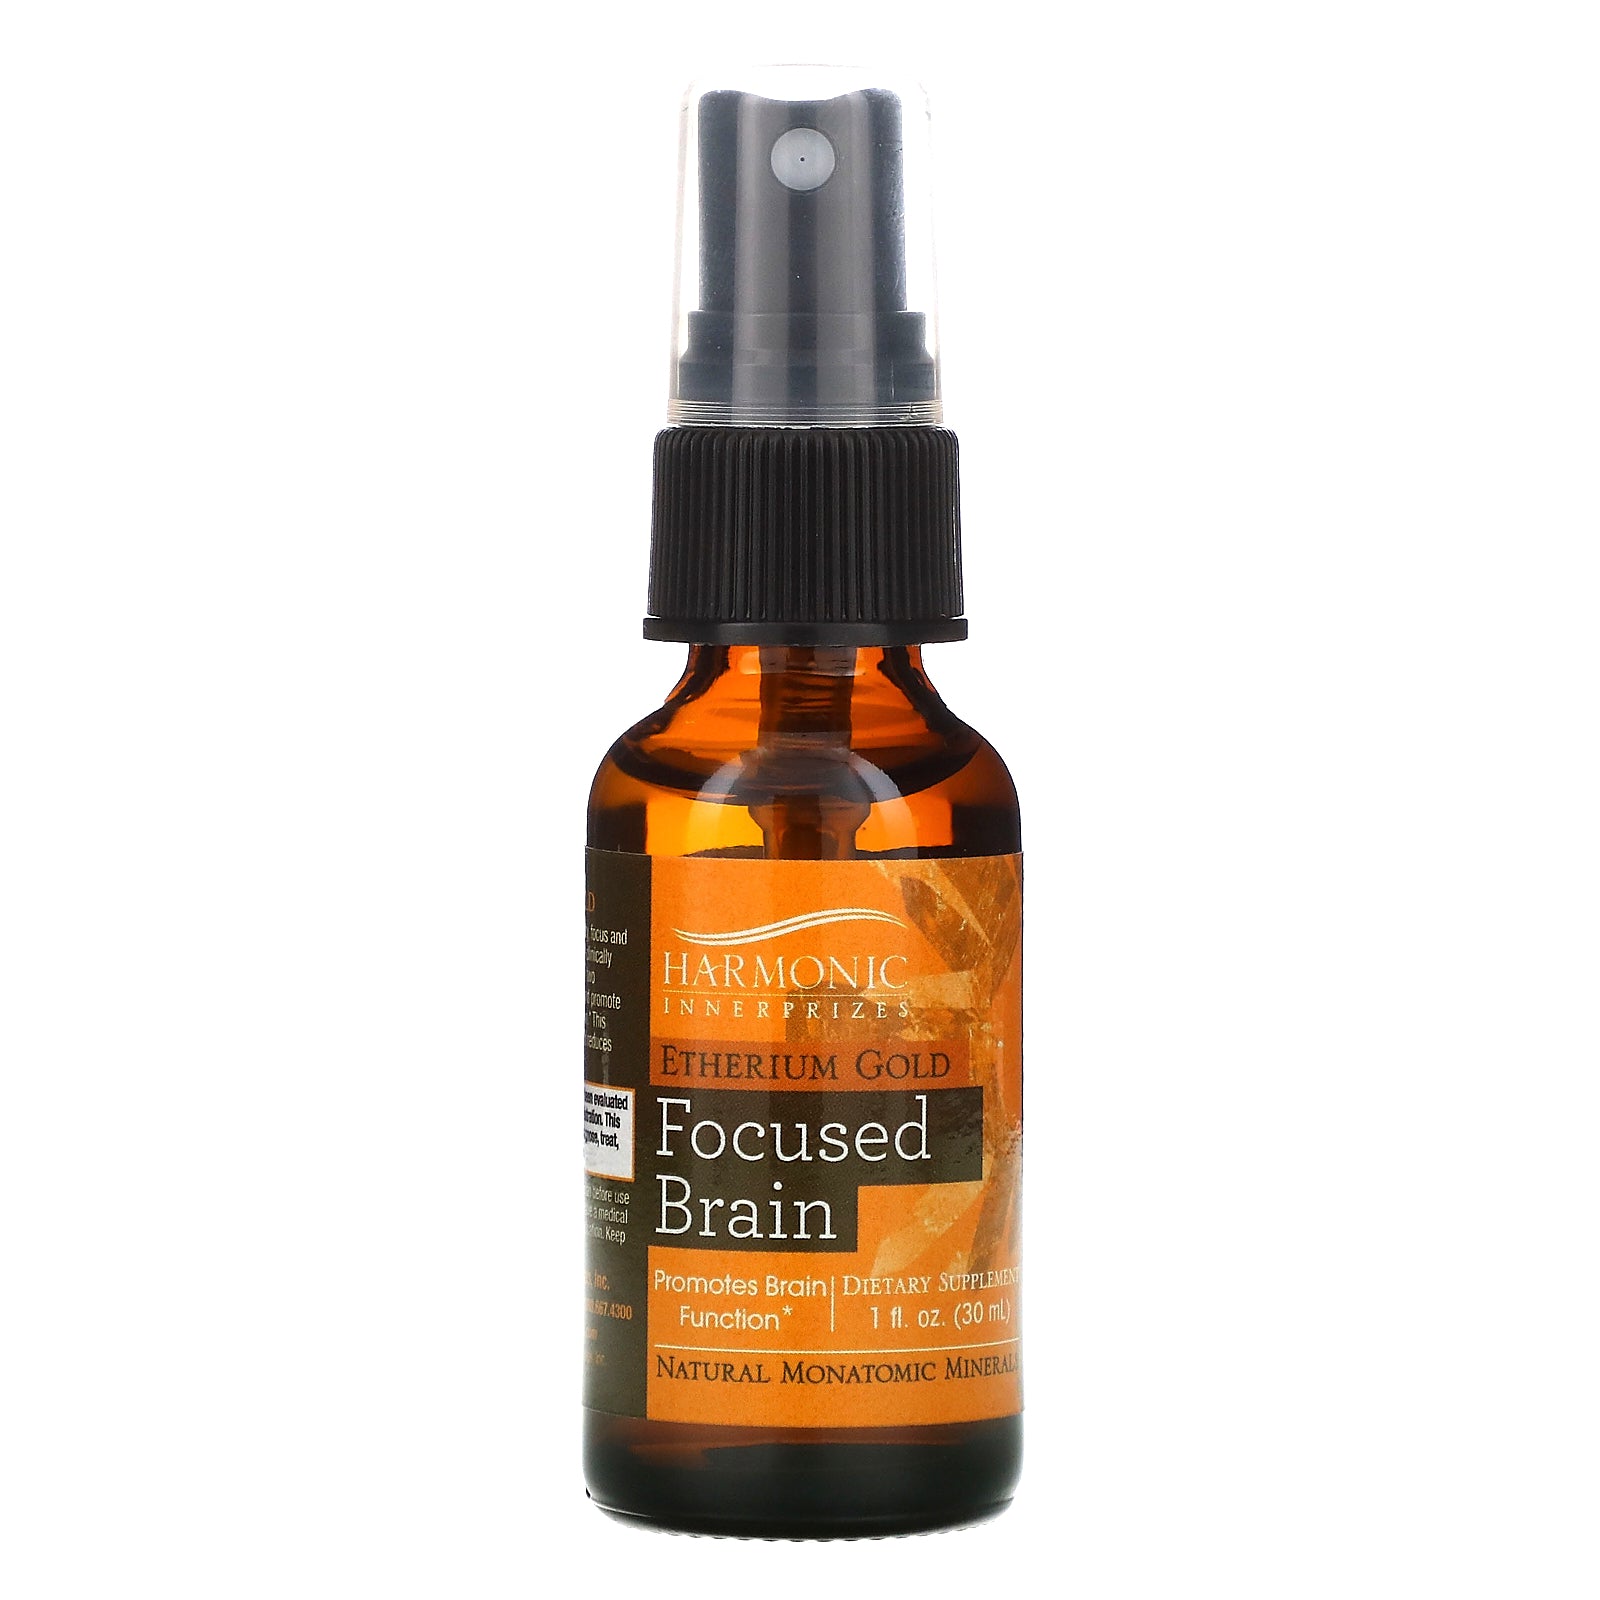 Harmonic Innerprizes, Etherium Gold, Focused Brain, 1 fl oz (30 ml)